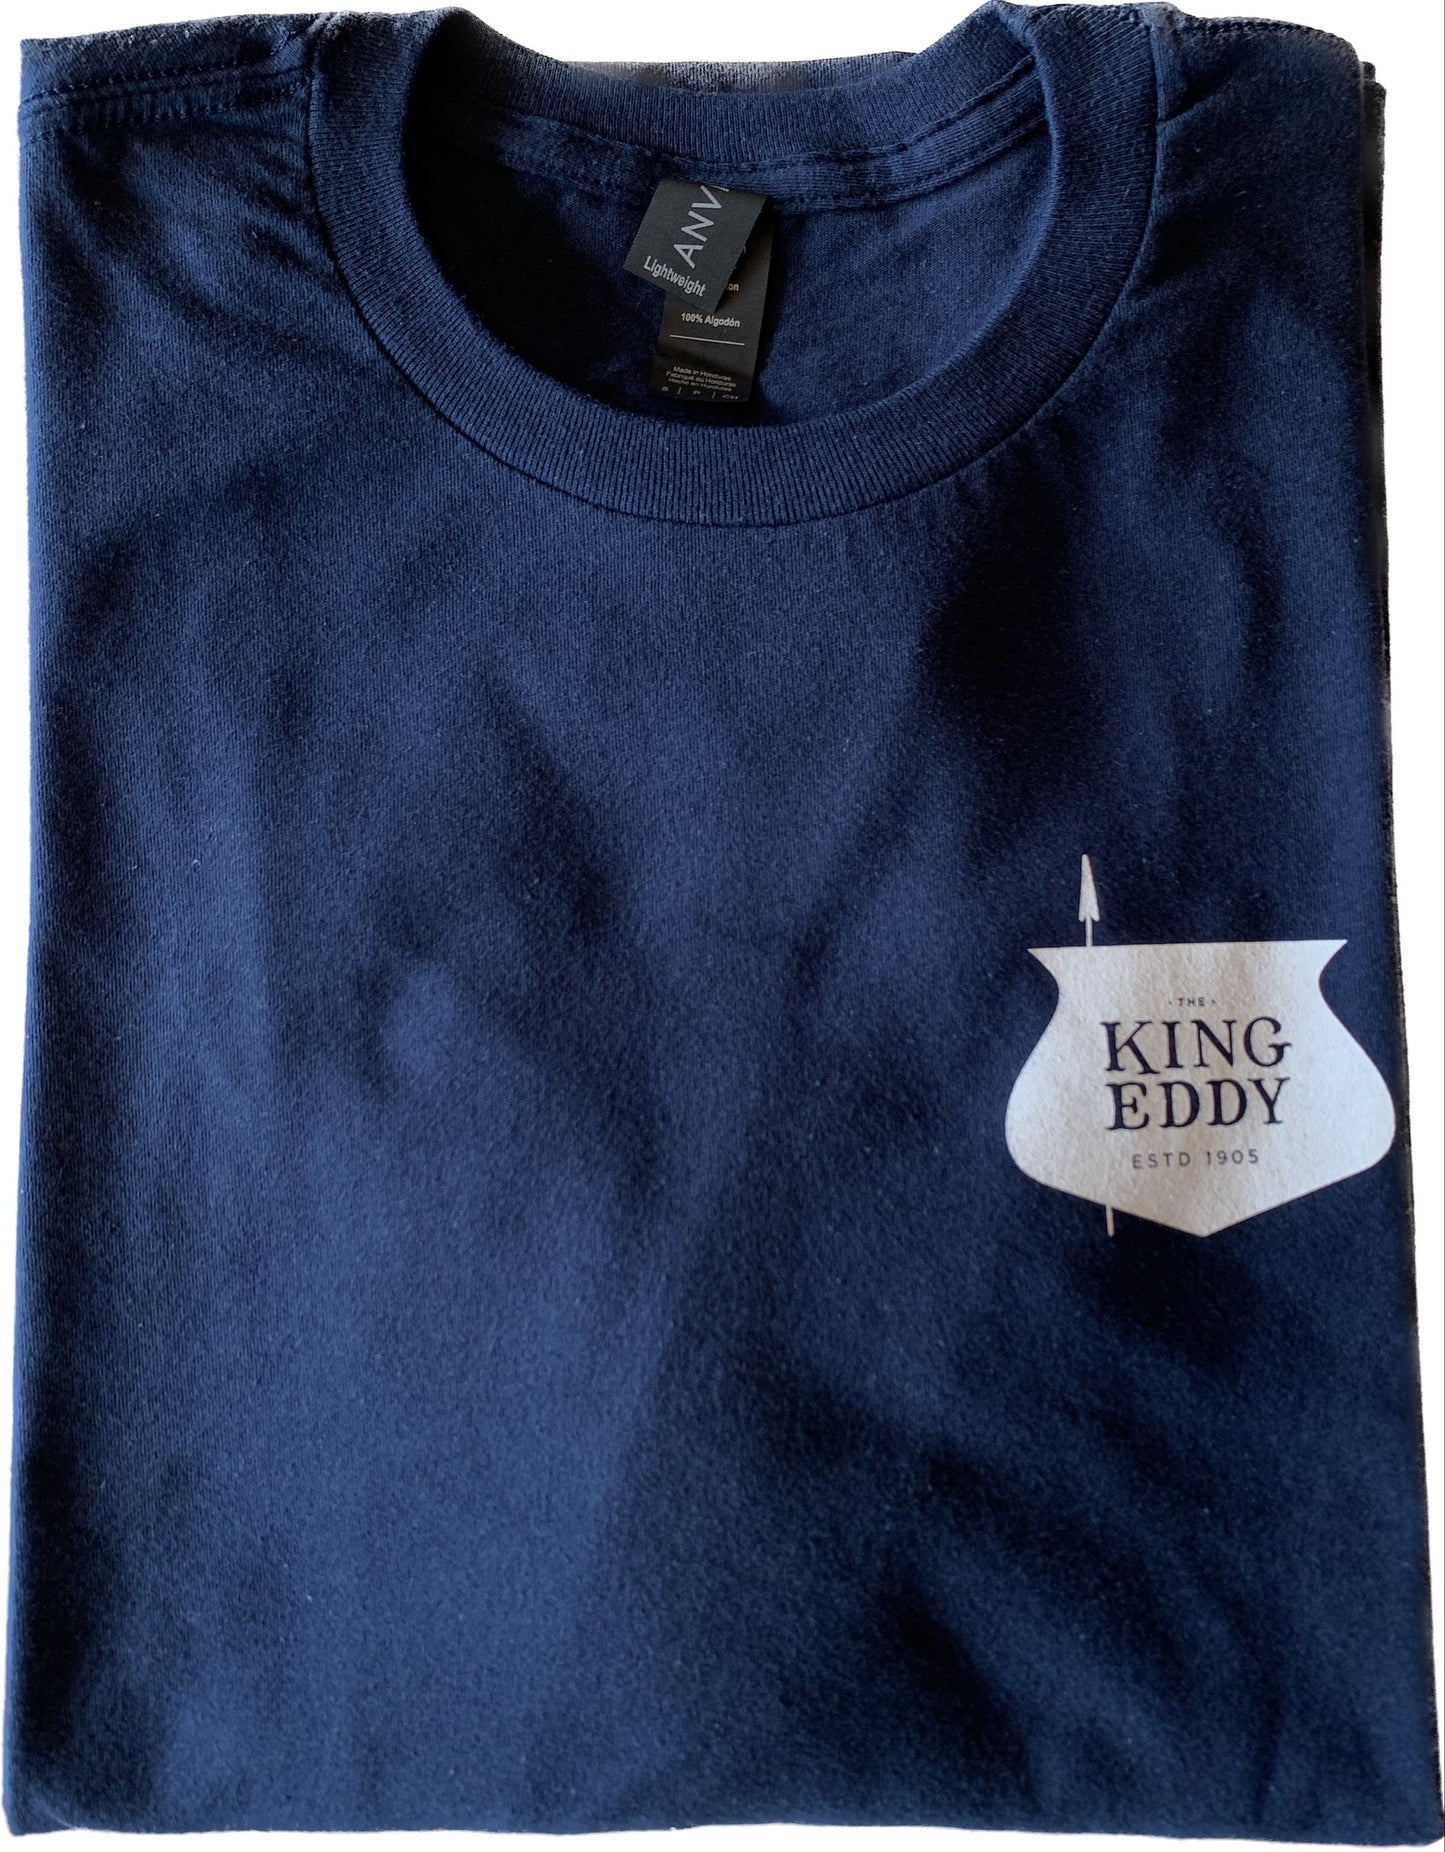 King Eddy Long Sleeve Shirt